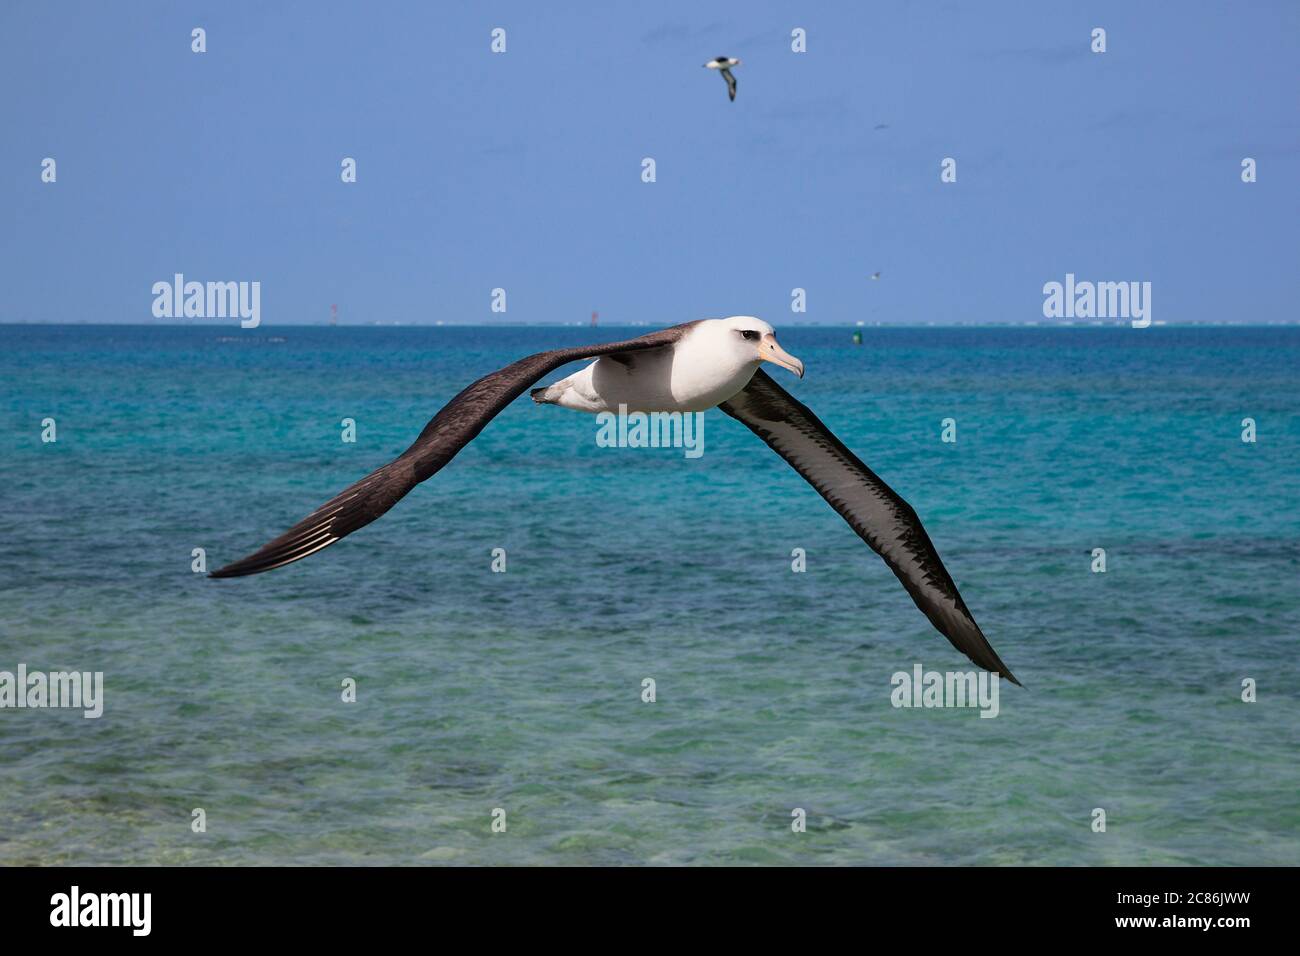 Laysan albatross, Phoebastria immutabilis, flying over lagoon, Sand Island, Midway Atoll National Wildlife Refuge, Papahanaumokuakea Marine Nat. Mon. Stock Photo